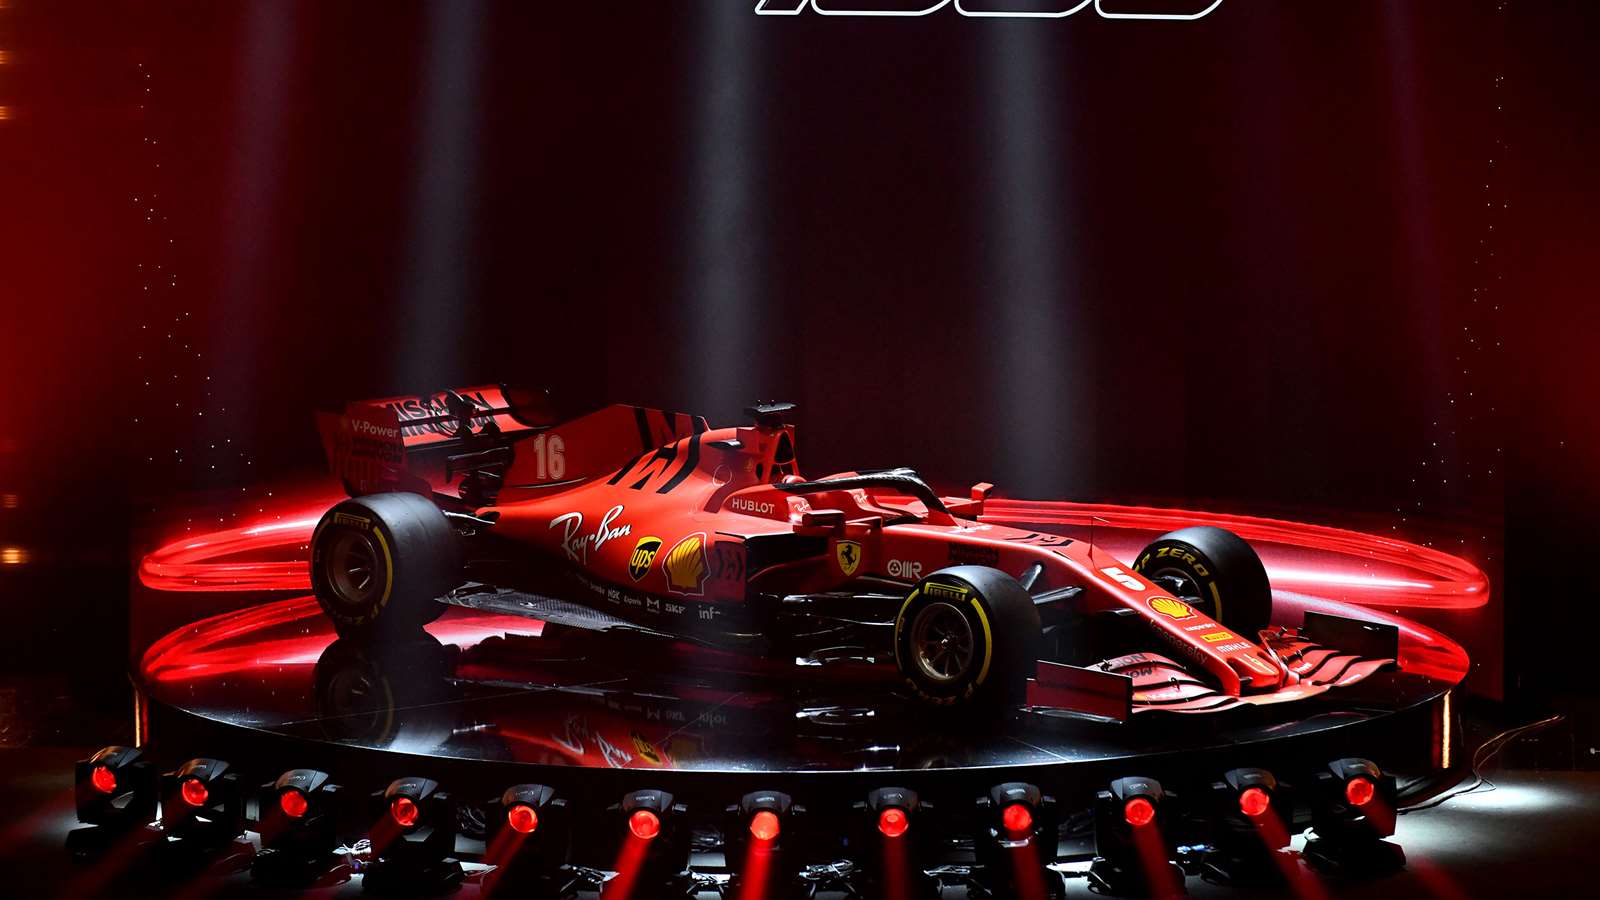 Gallery The Ferrari SF1000 2020 Formula 1 car